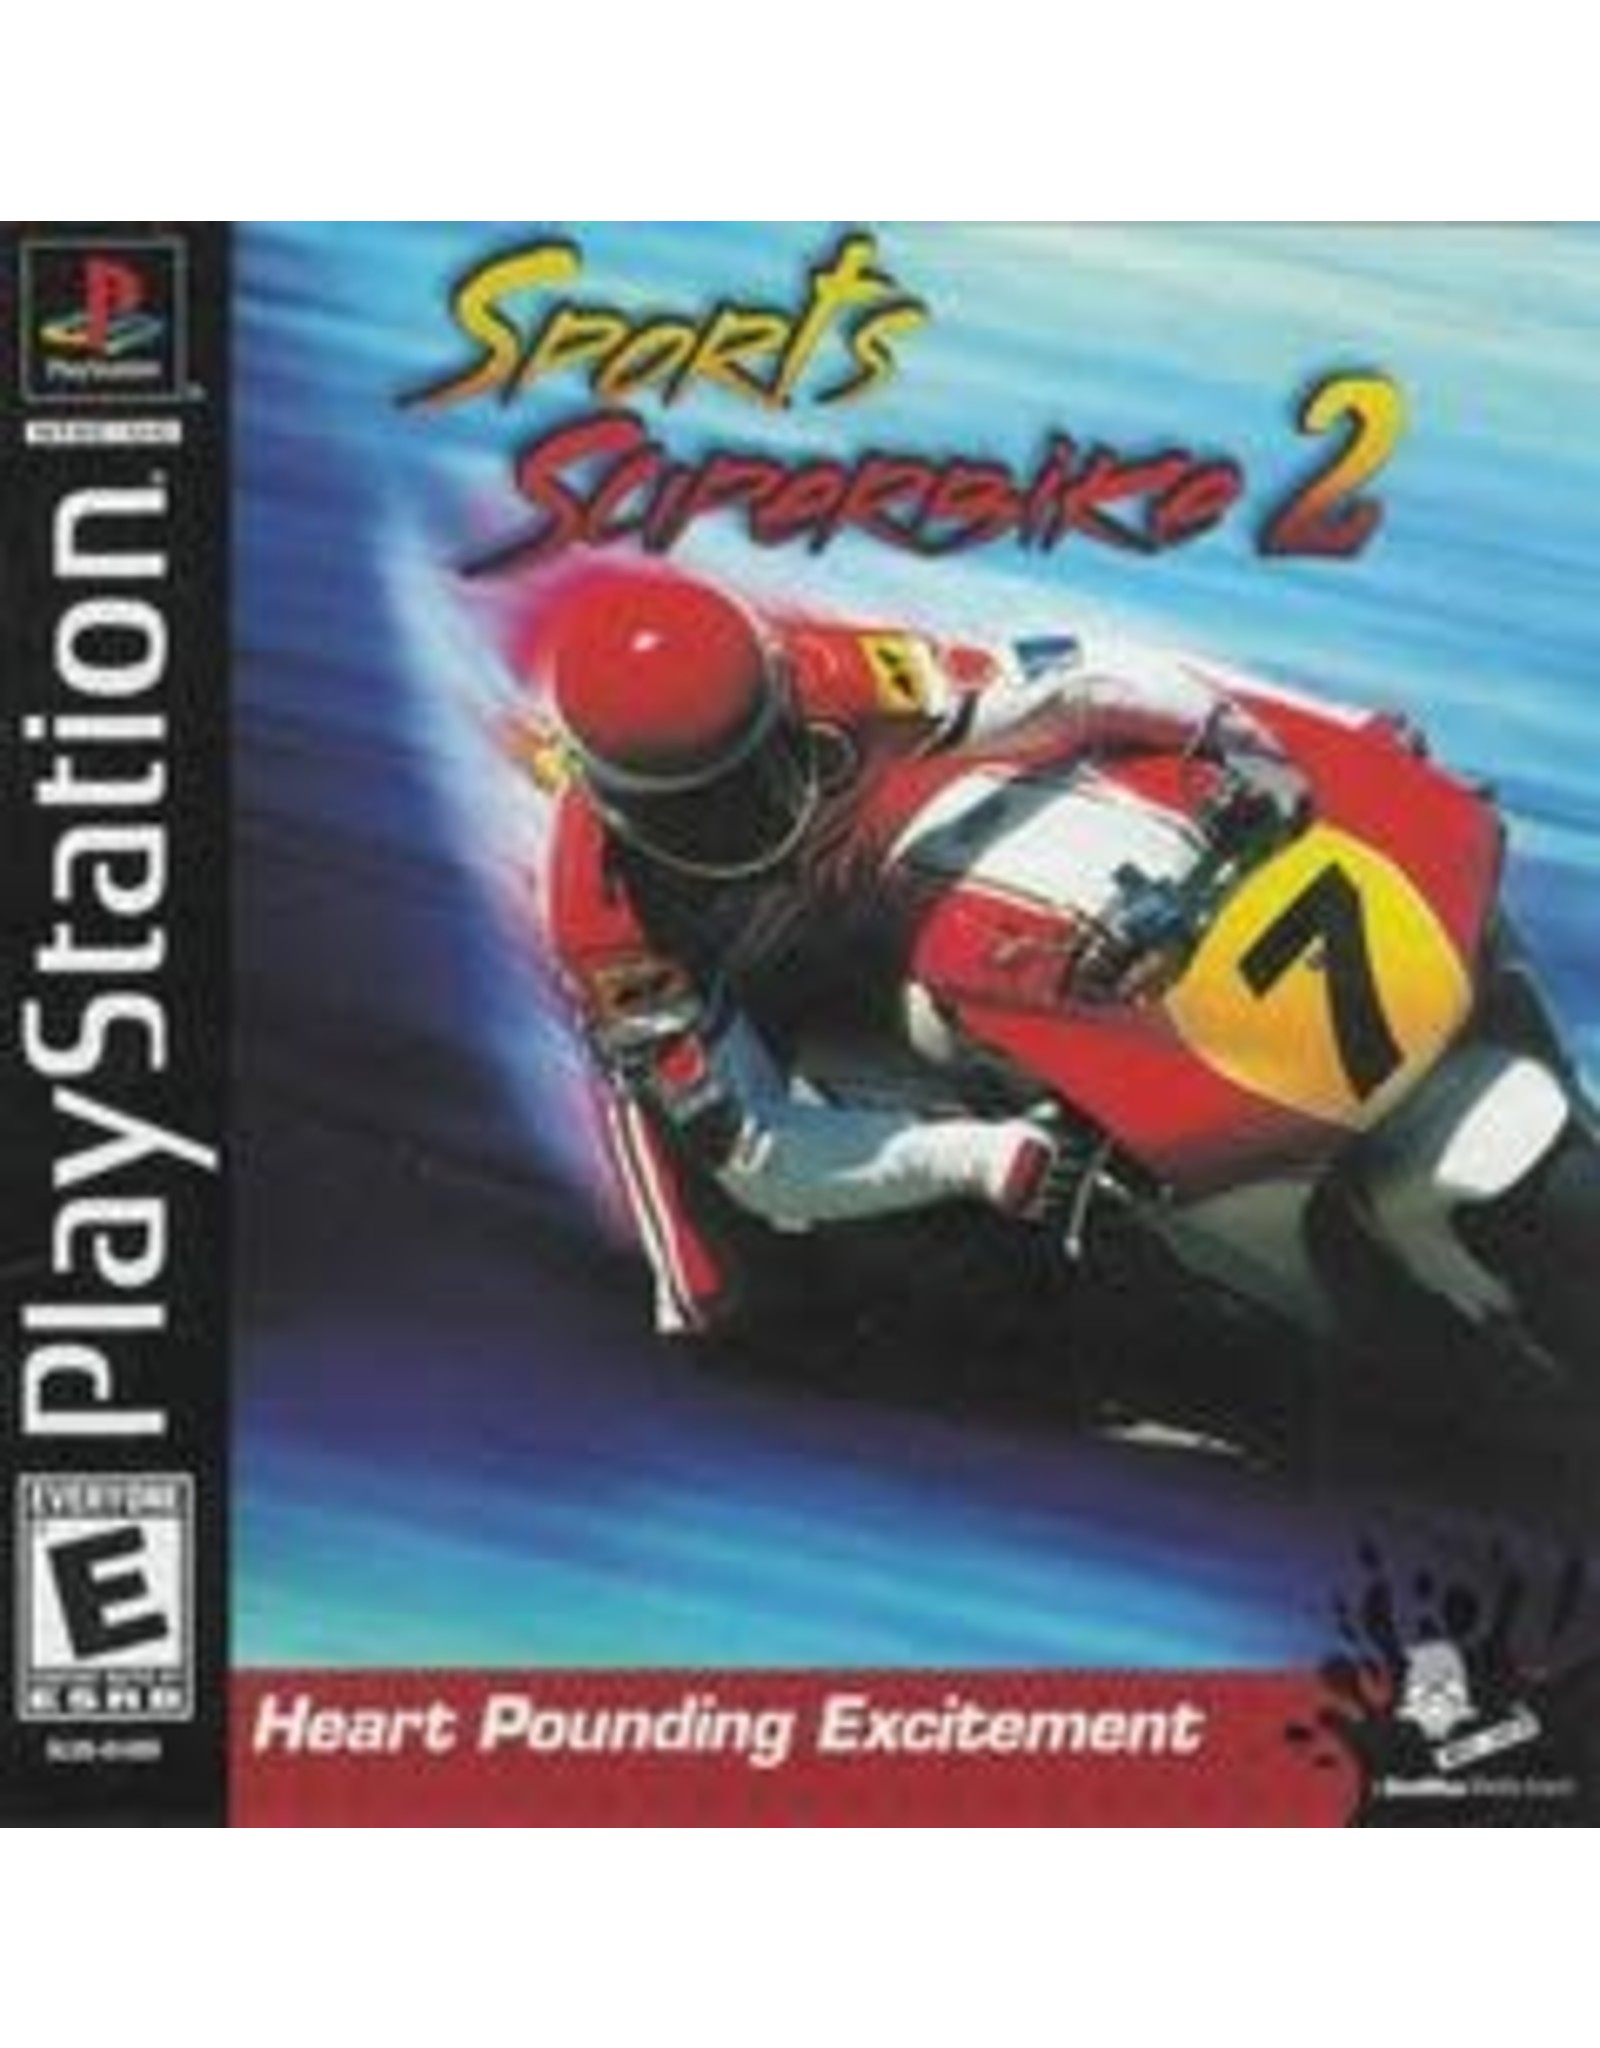 Playstation Sports Superbike 2 (CiB)